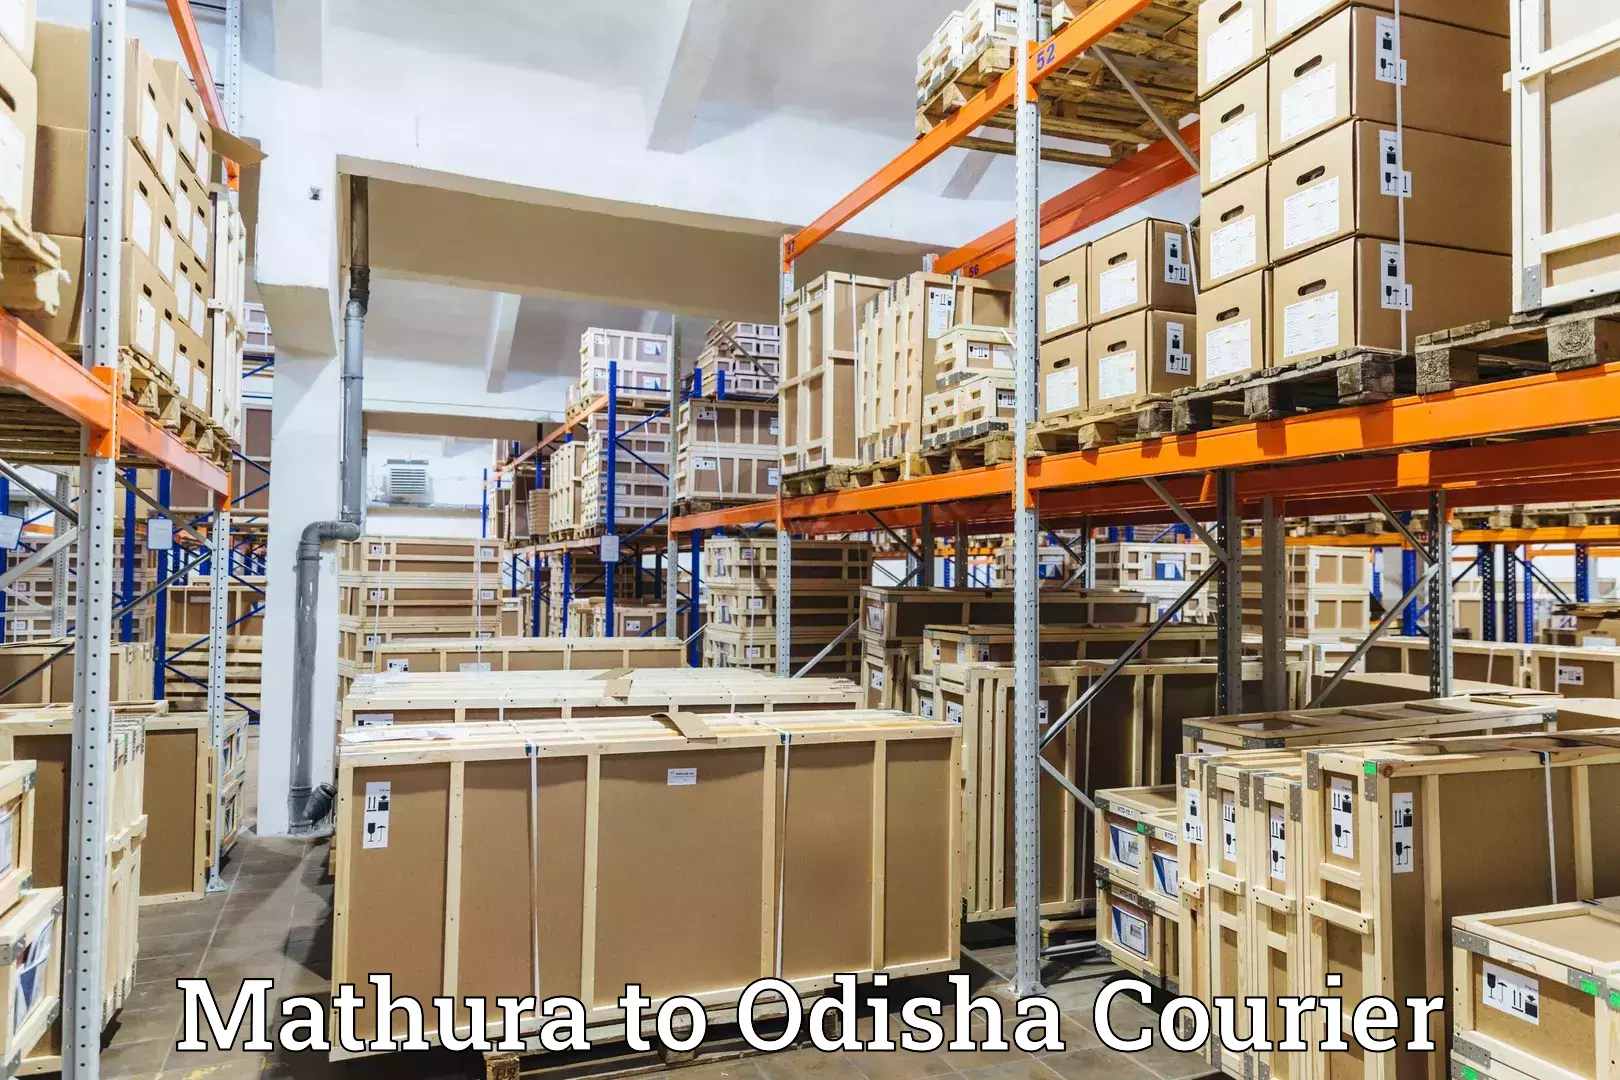 Express delivery capabilities Mathura to Joda